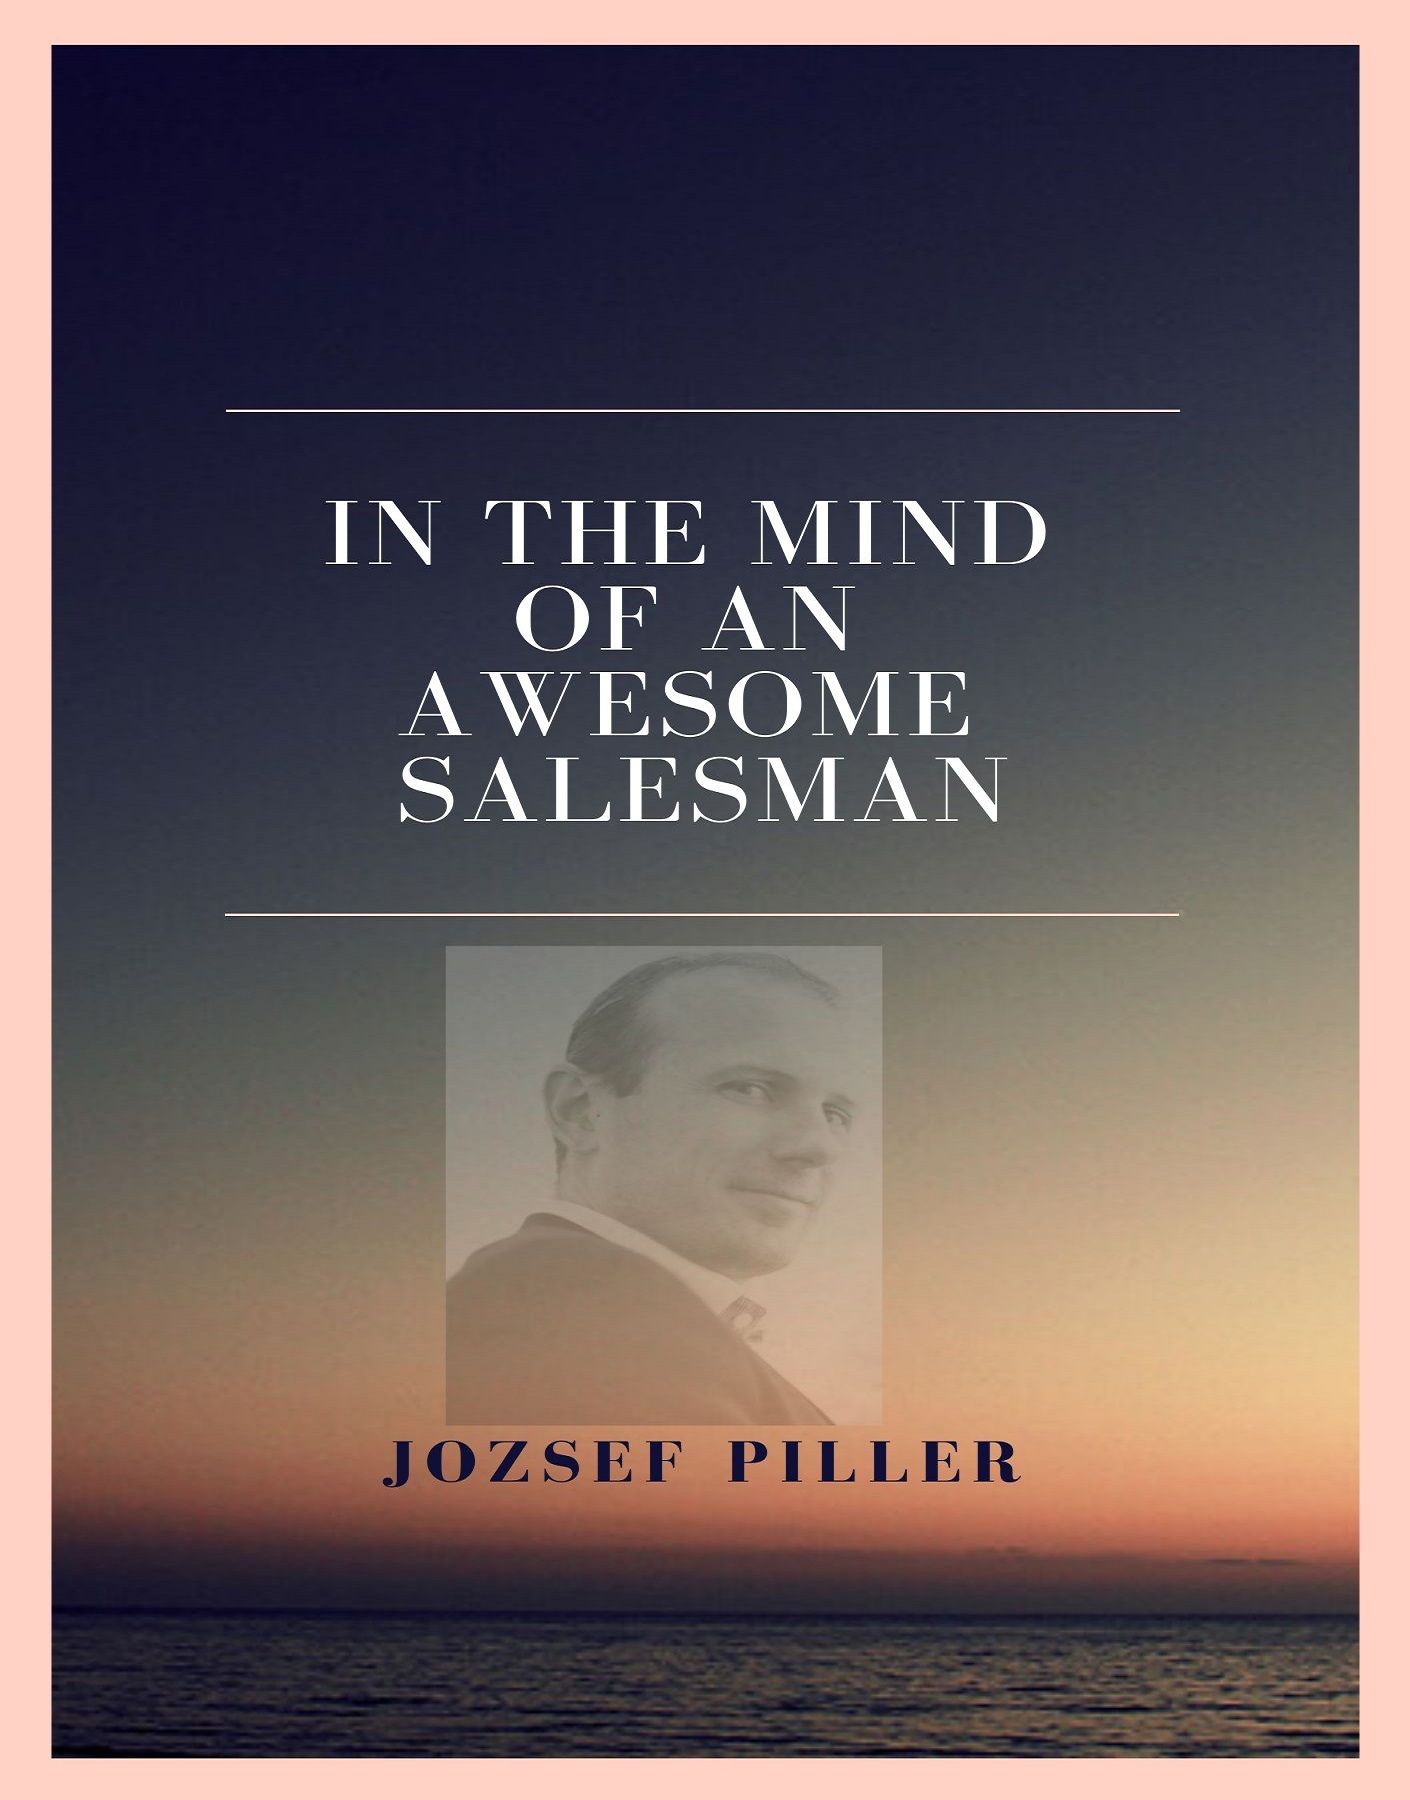 In the mind of an awesome salesman, ljudbok av Jozsef Piller